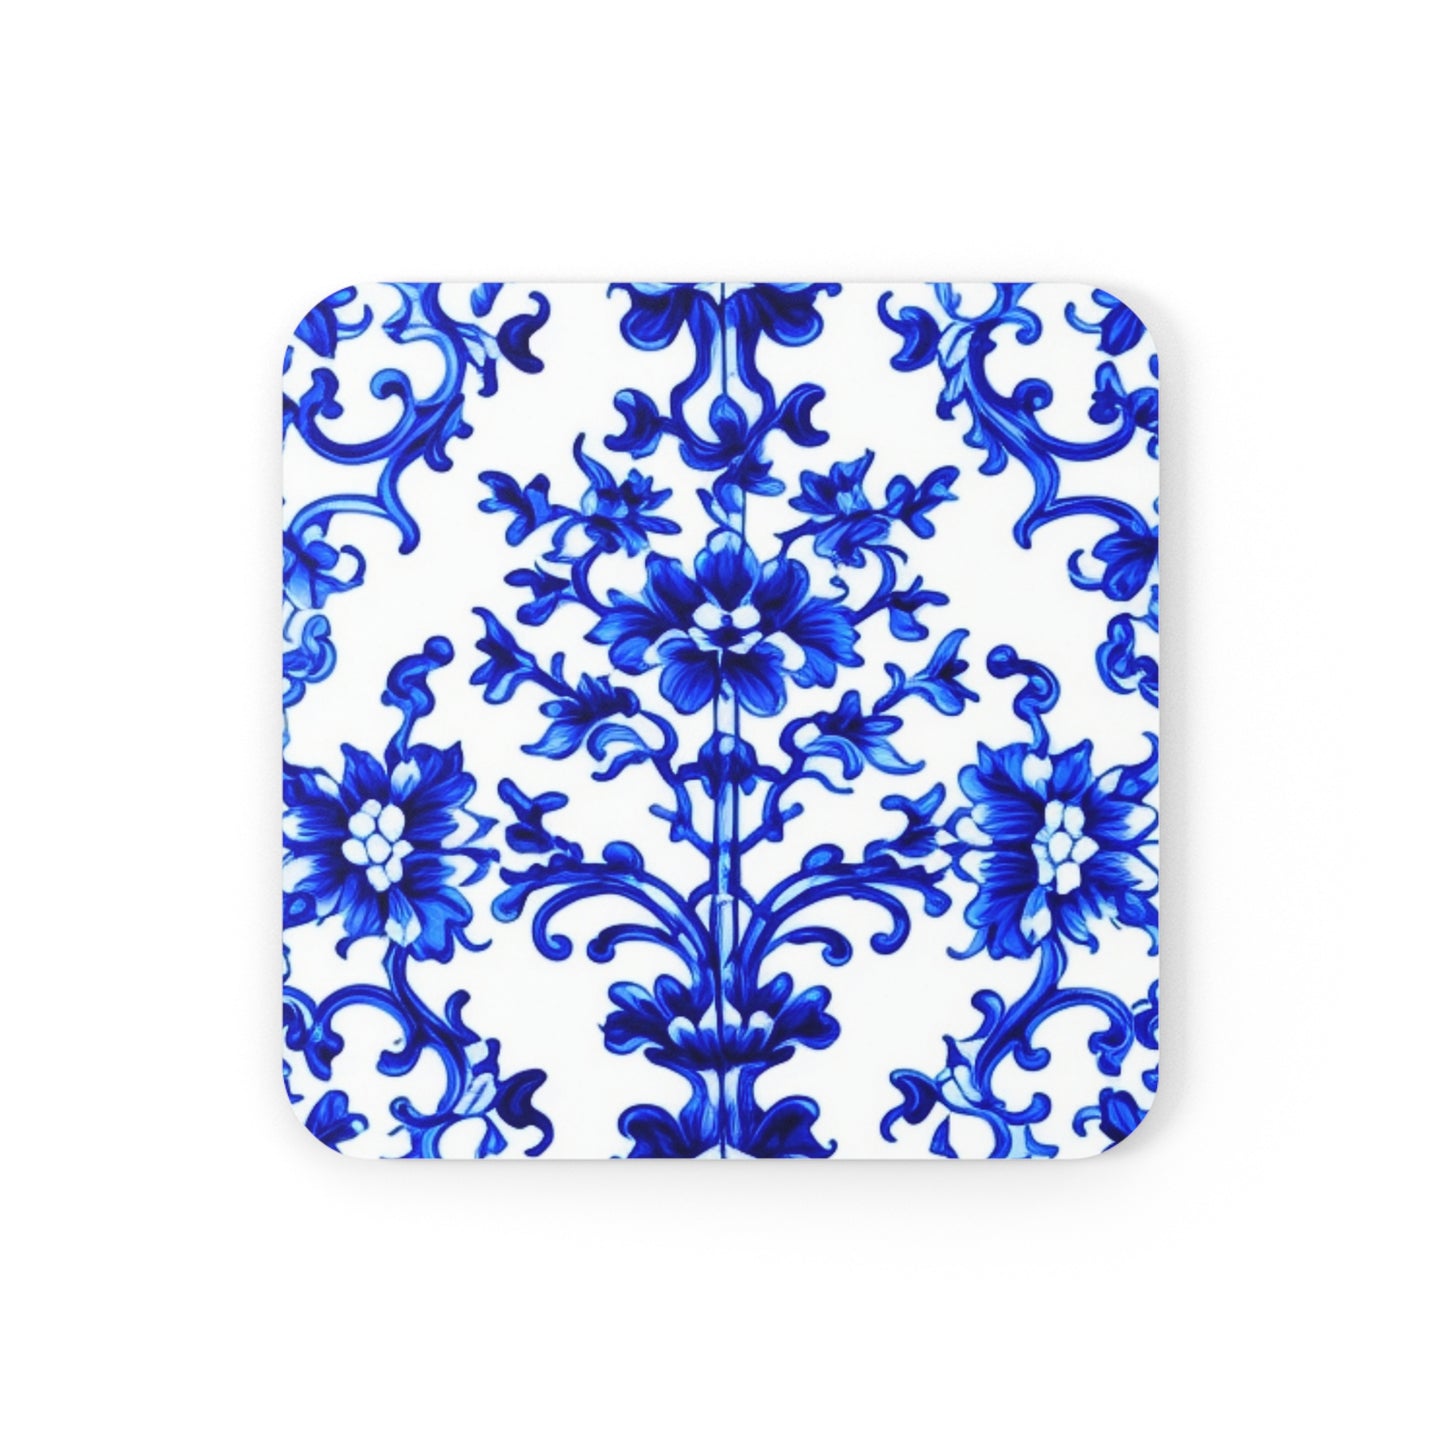 Portuguese Blue and White Tile Pattern Cocktail Party Beverage Entertaining Corkwood Coaster Set